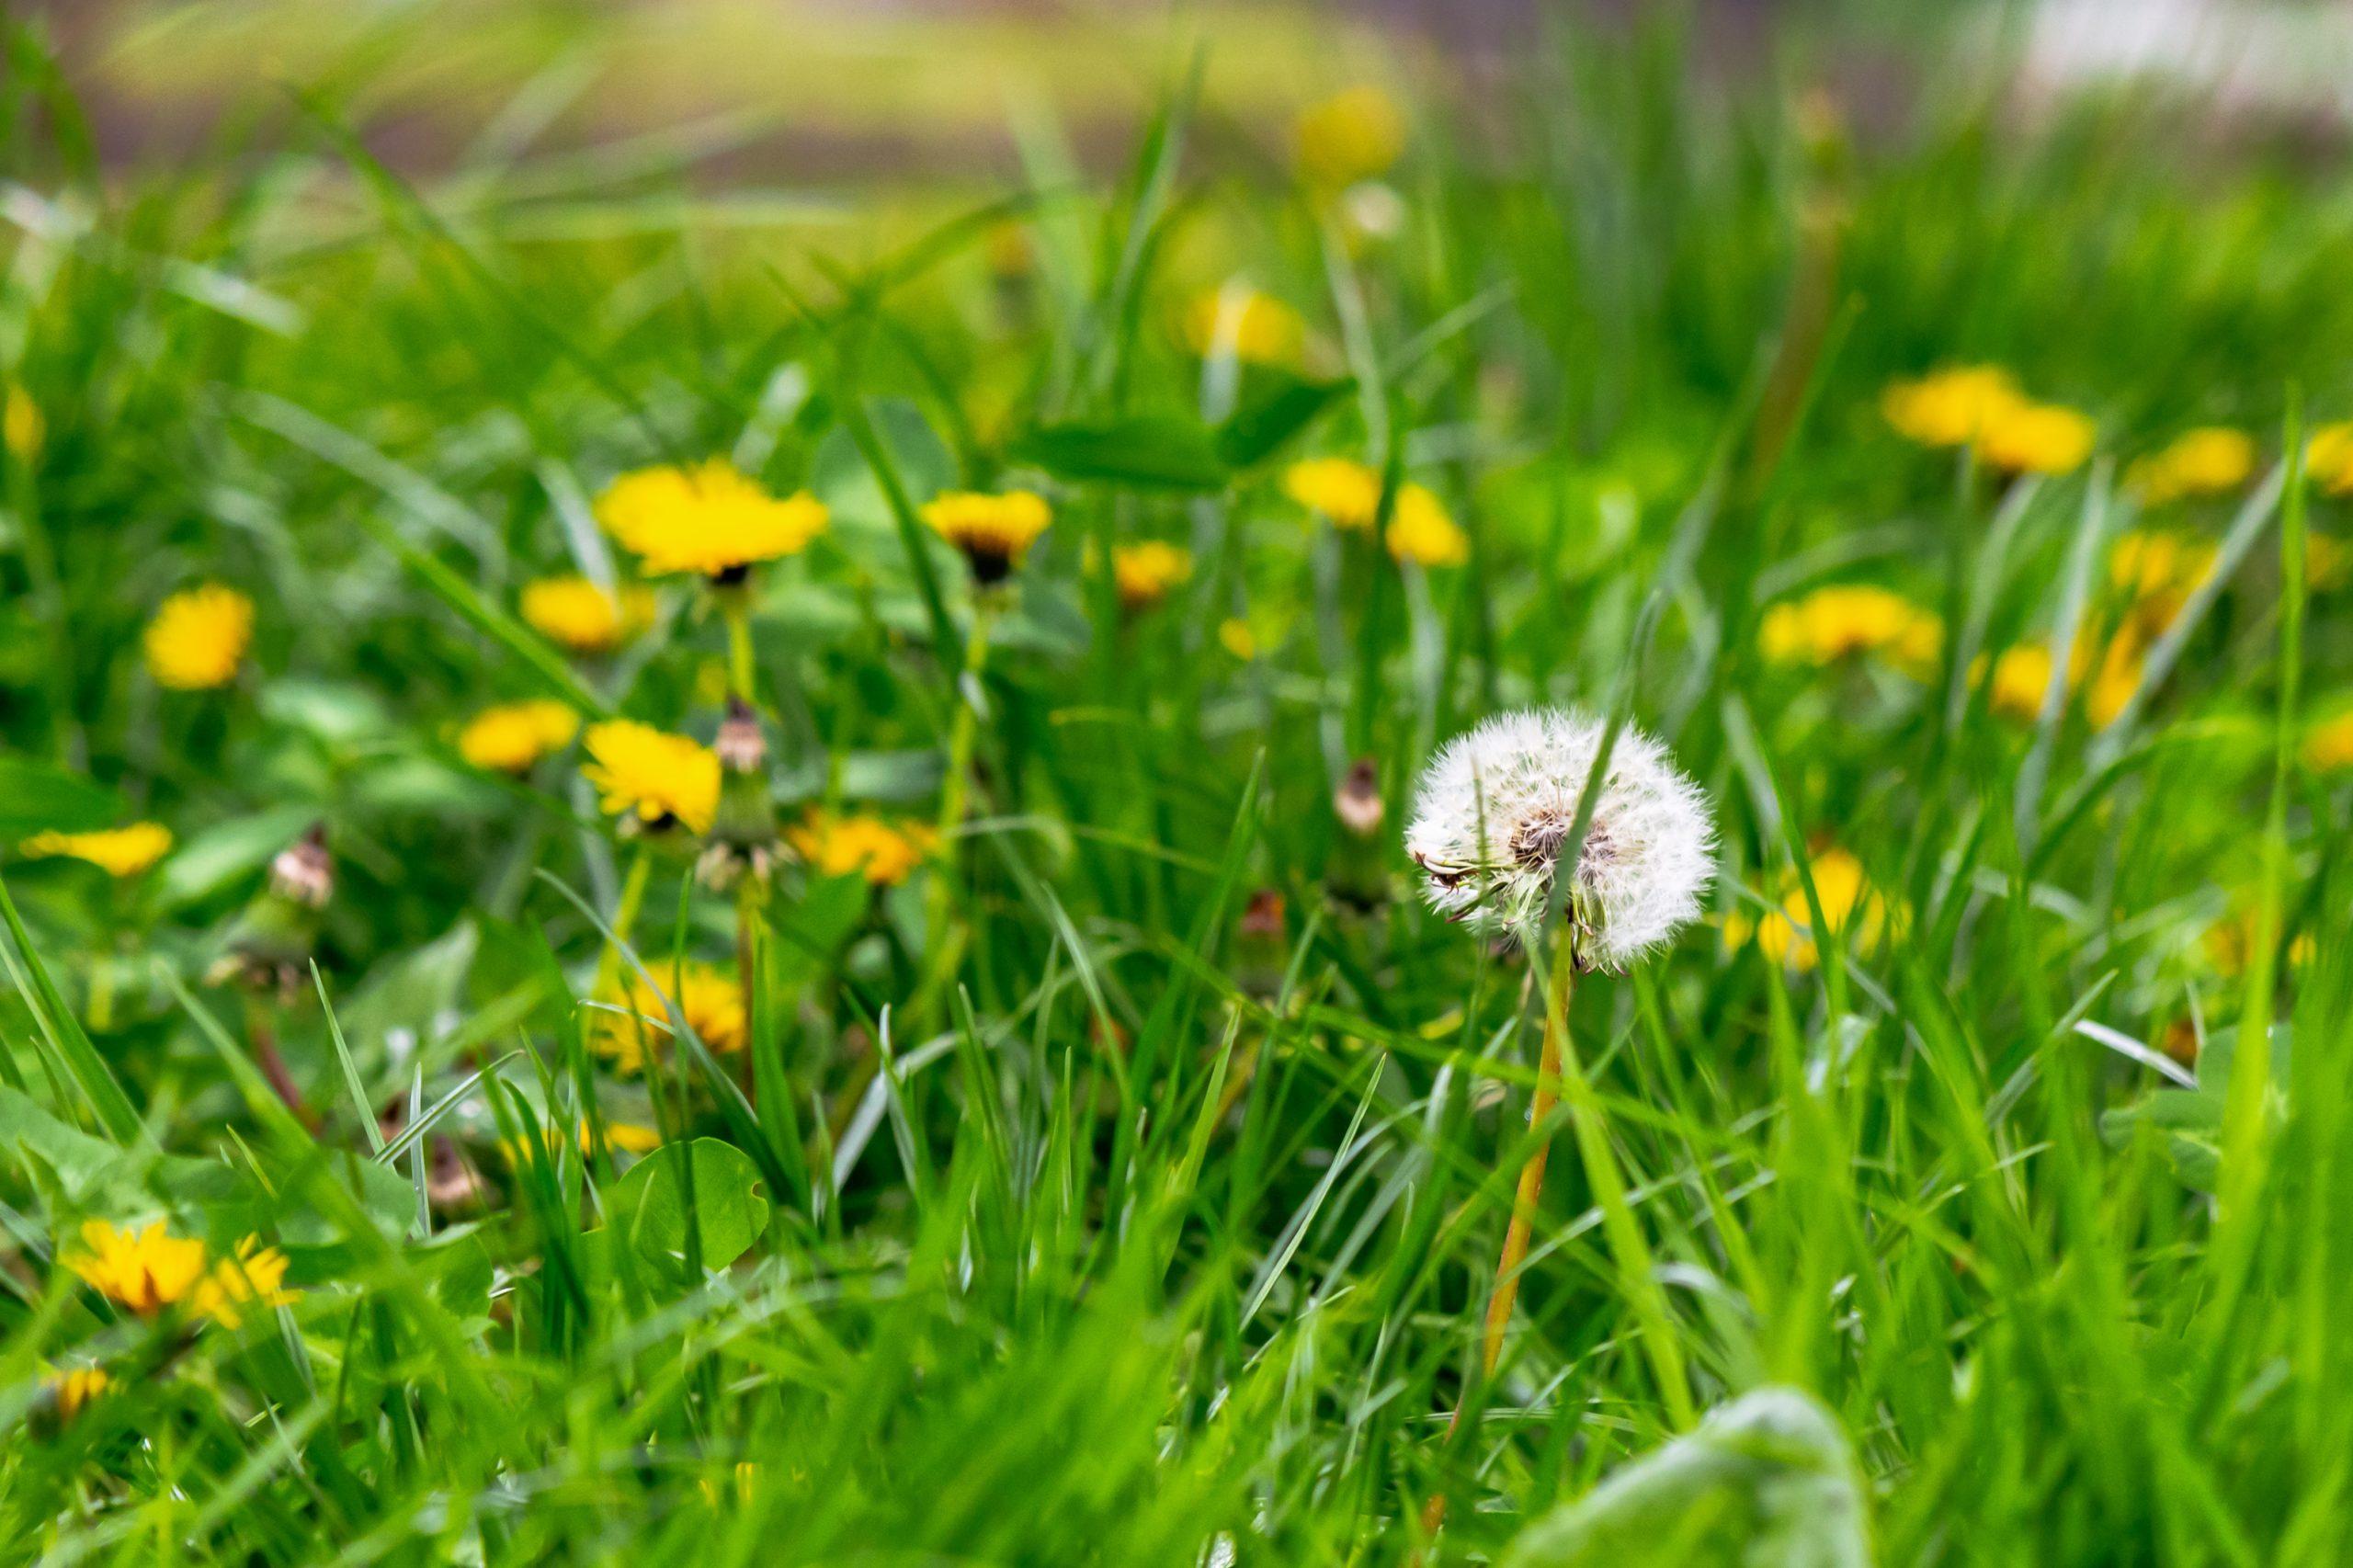 spring weeds: clover and dandelions